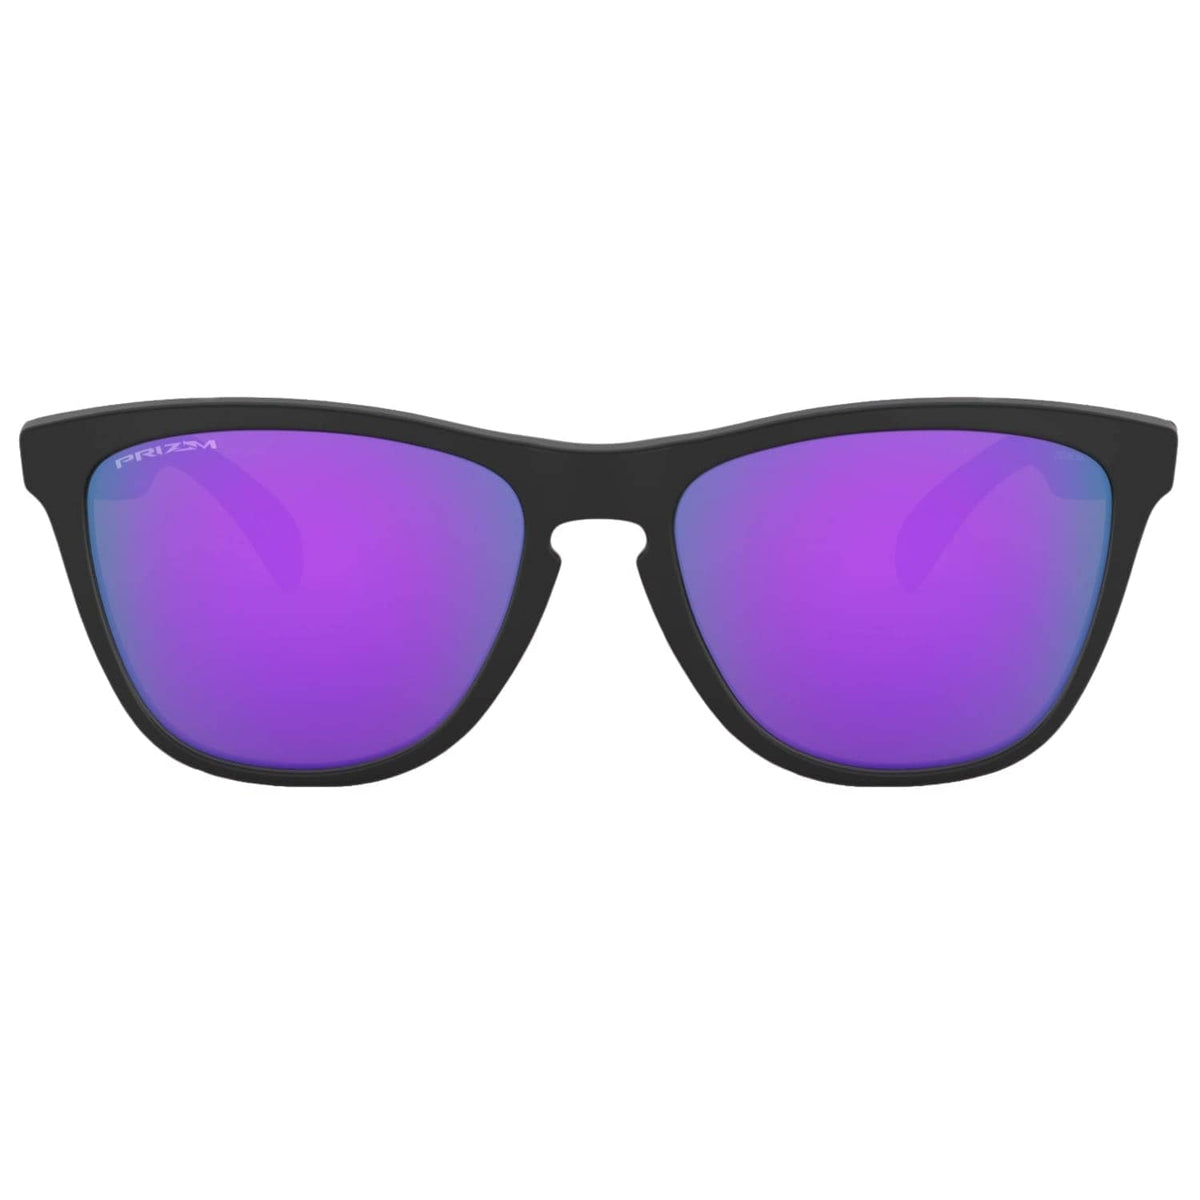 Oakley Frogskins Sunglasses Matte Black - Prizm Violet N/A - Round Sunglasses by Oakley